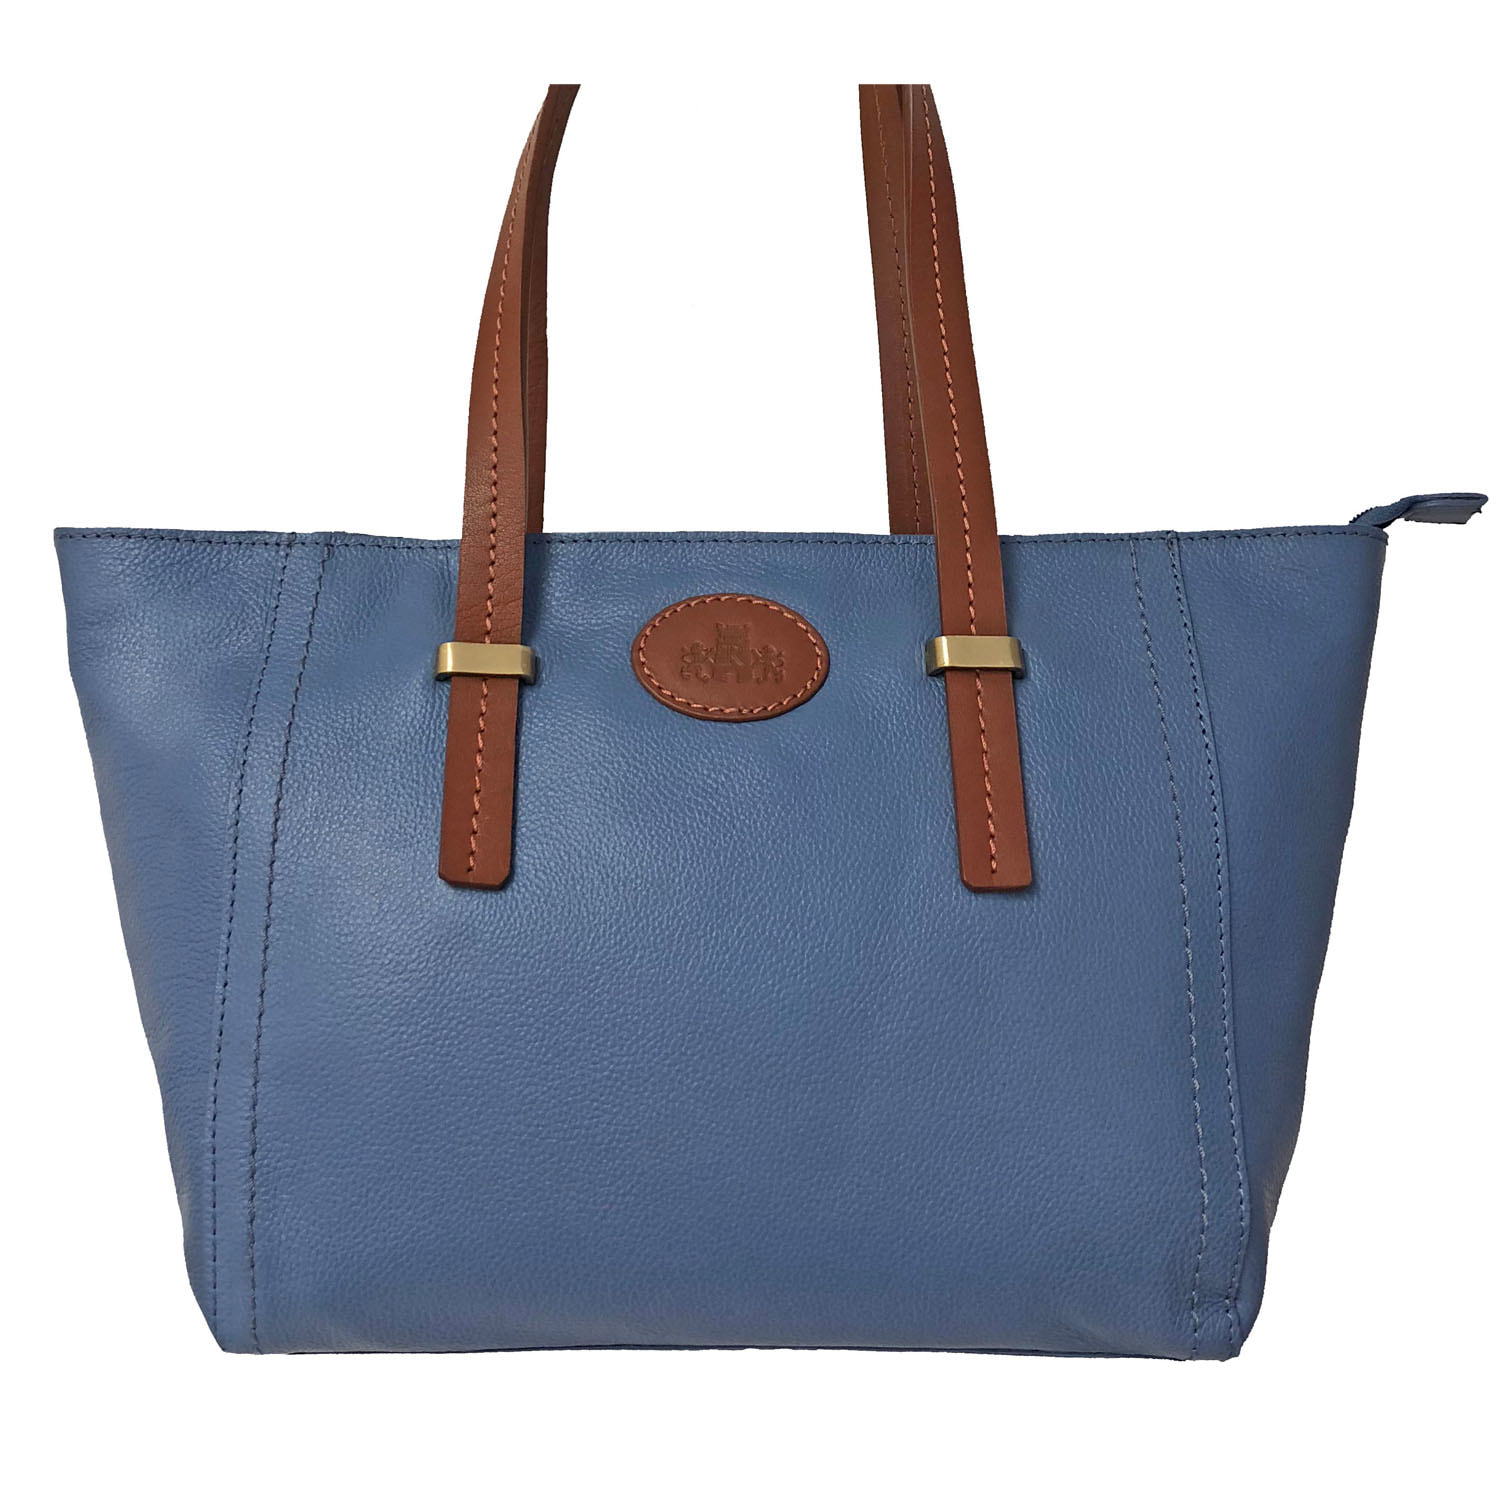 Over 60% Off Rowallan Blue Leather Handbag, Tote Bag